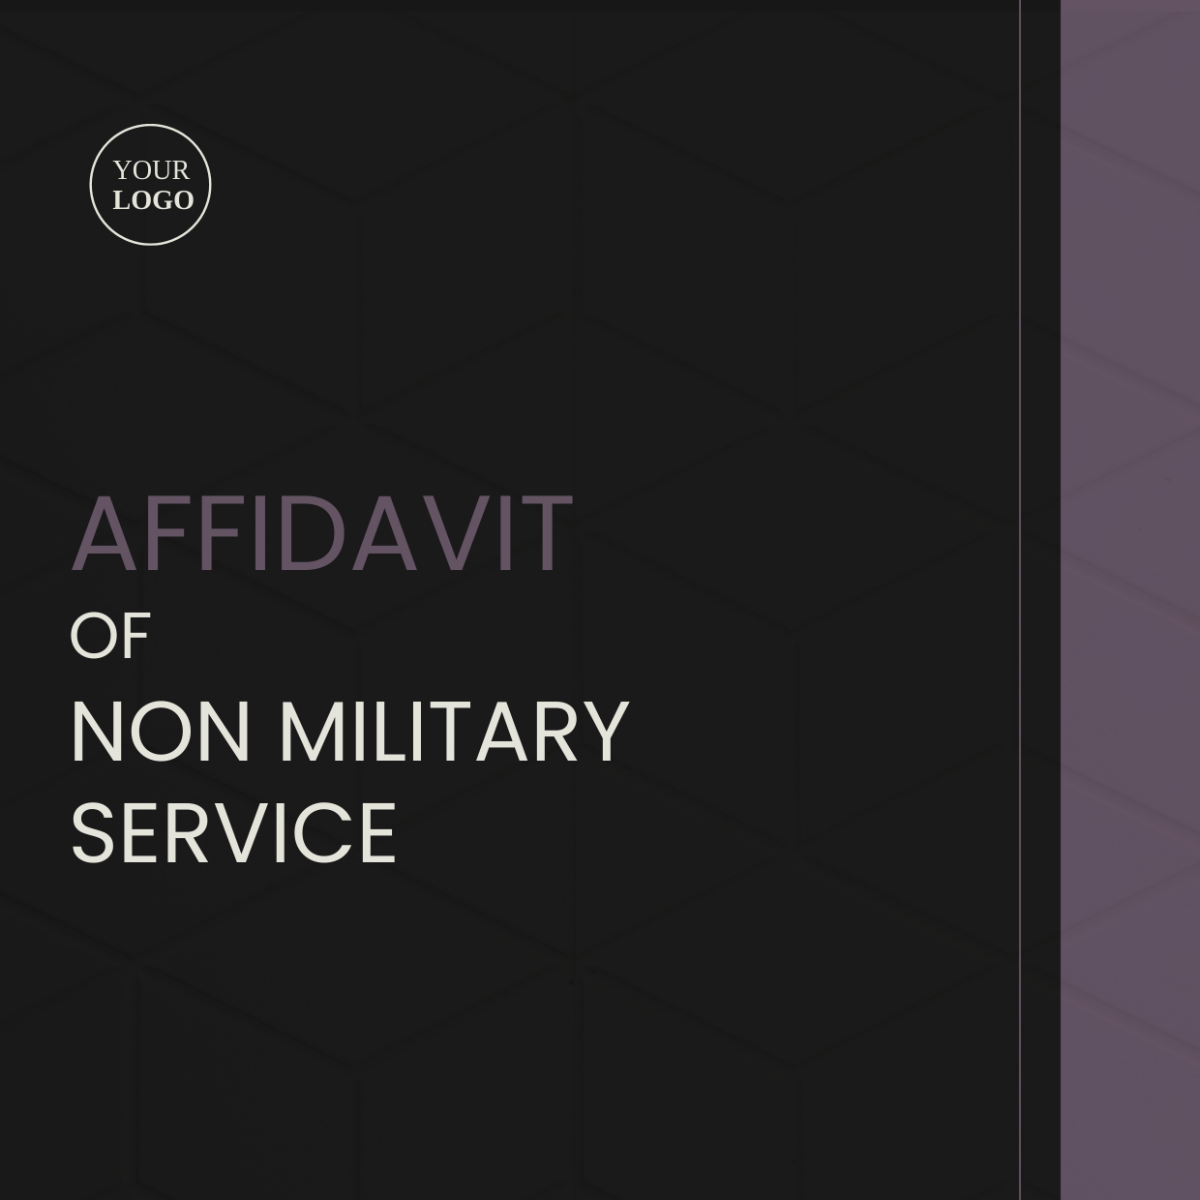 Affidavit of Non Military Service Template